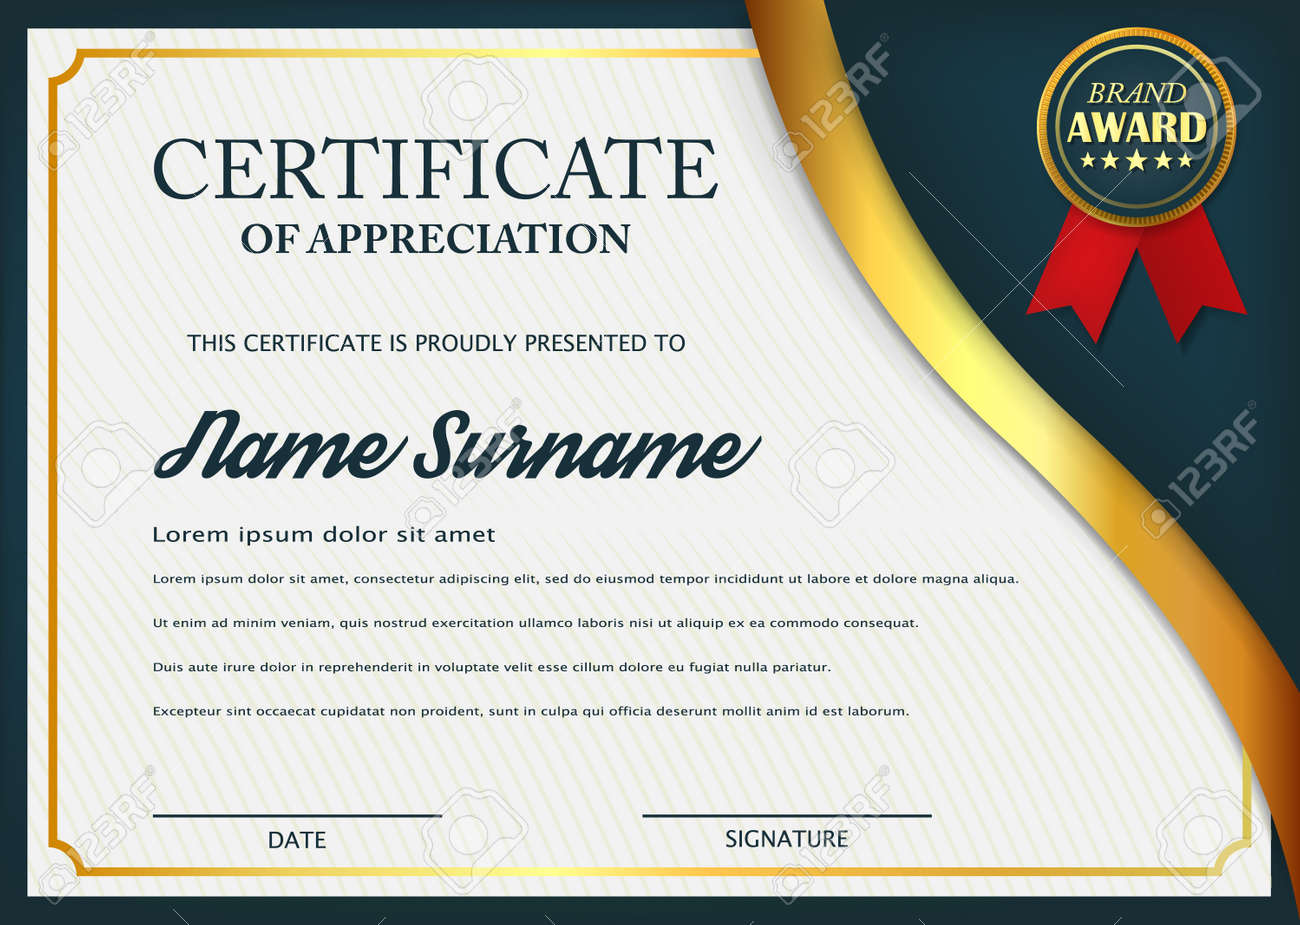 87339894-creative-certificate-of-appreciation-award-template-certificate-template-design-with-best-award-symb